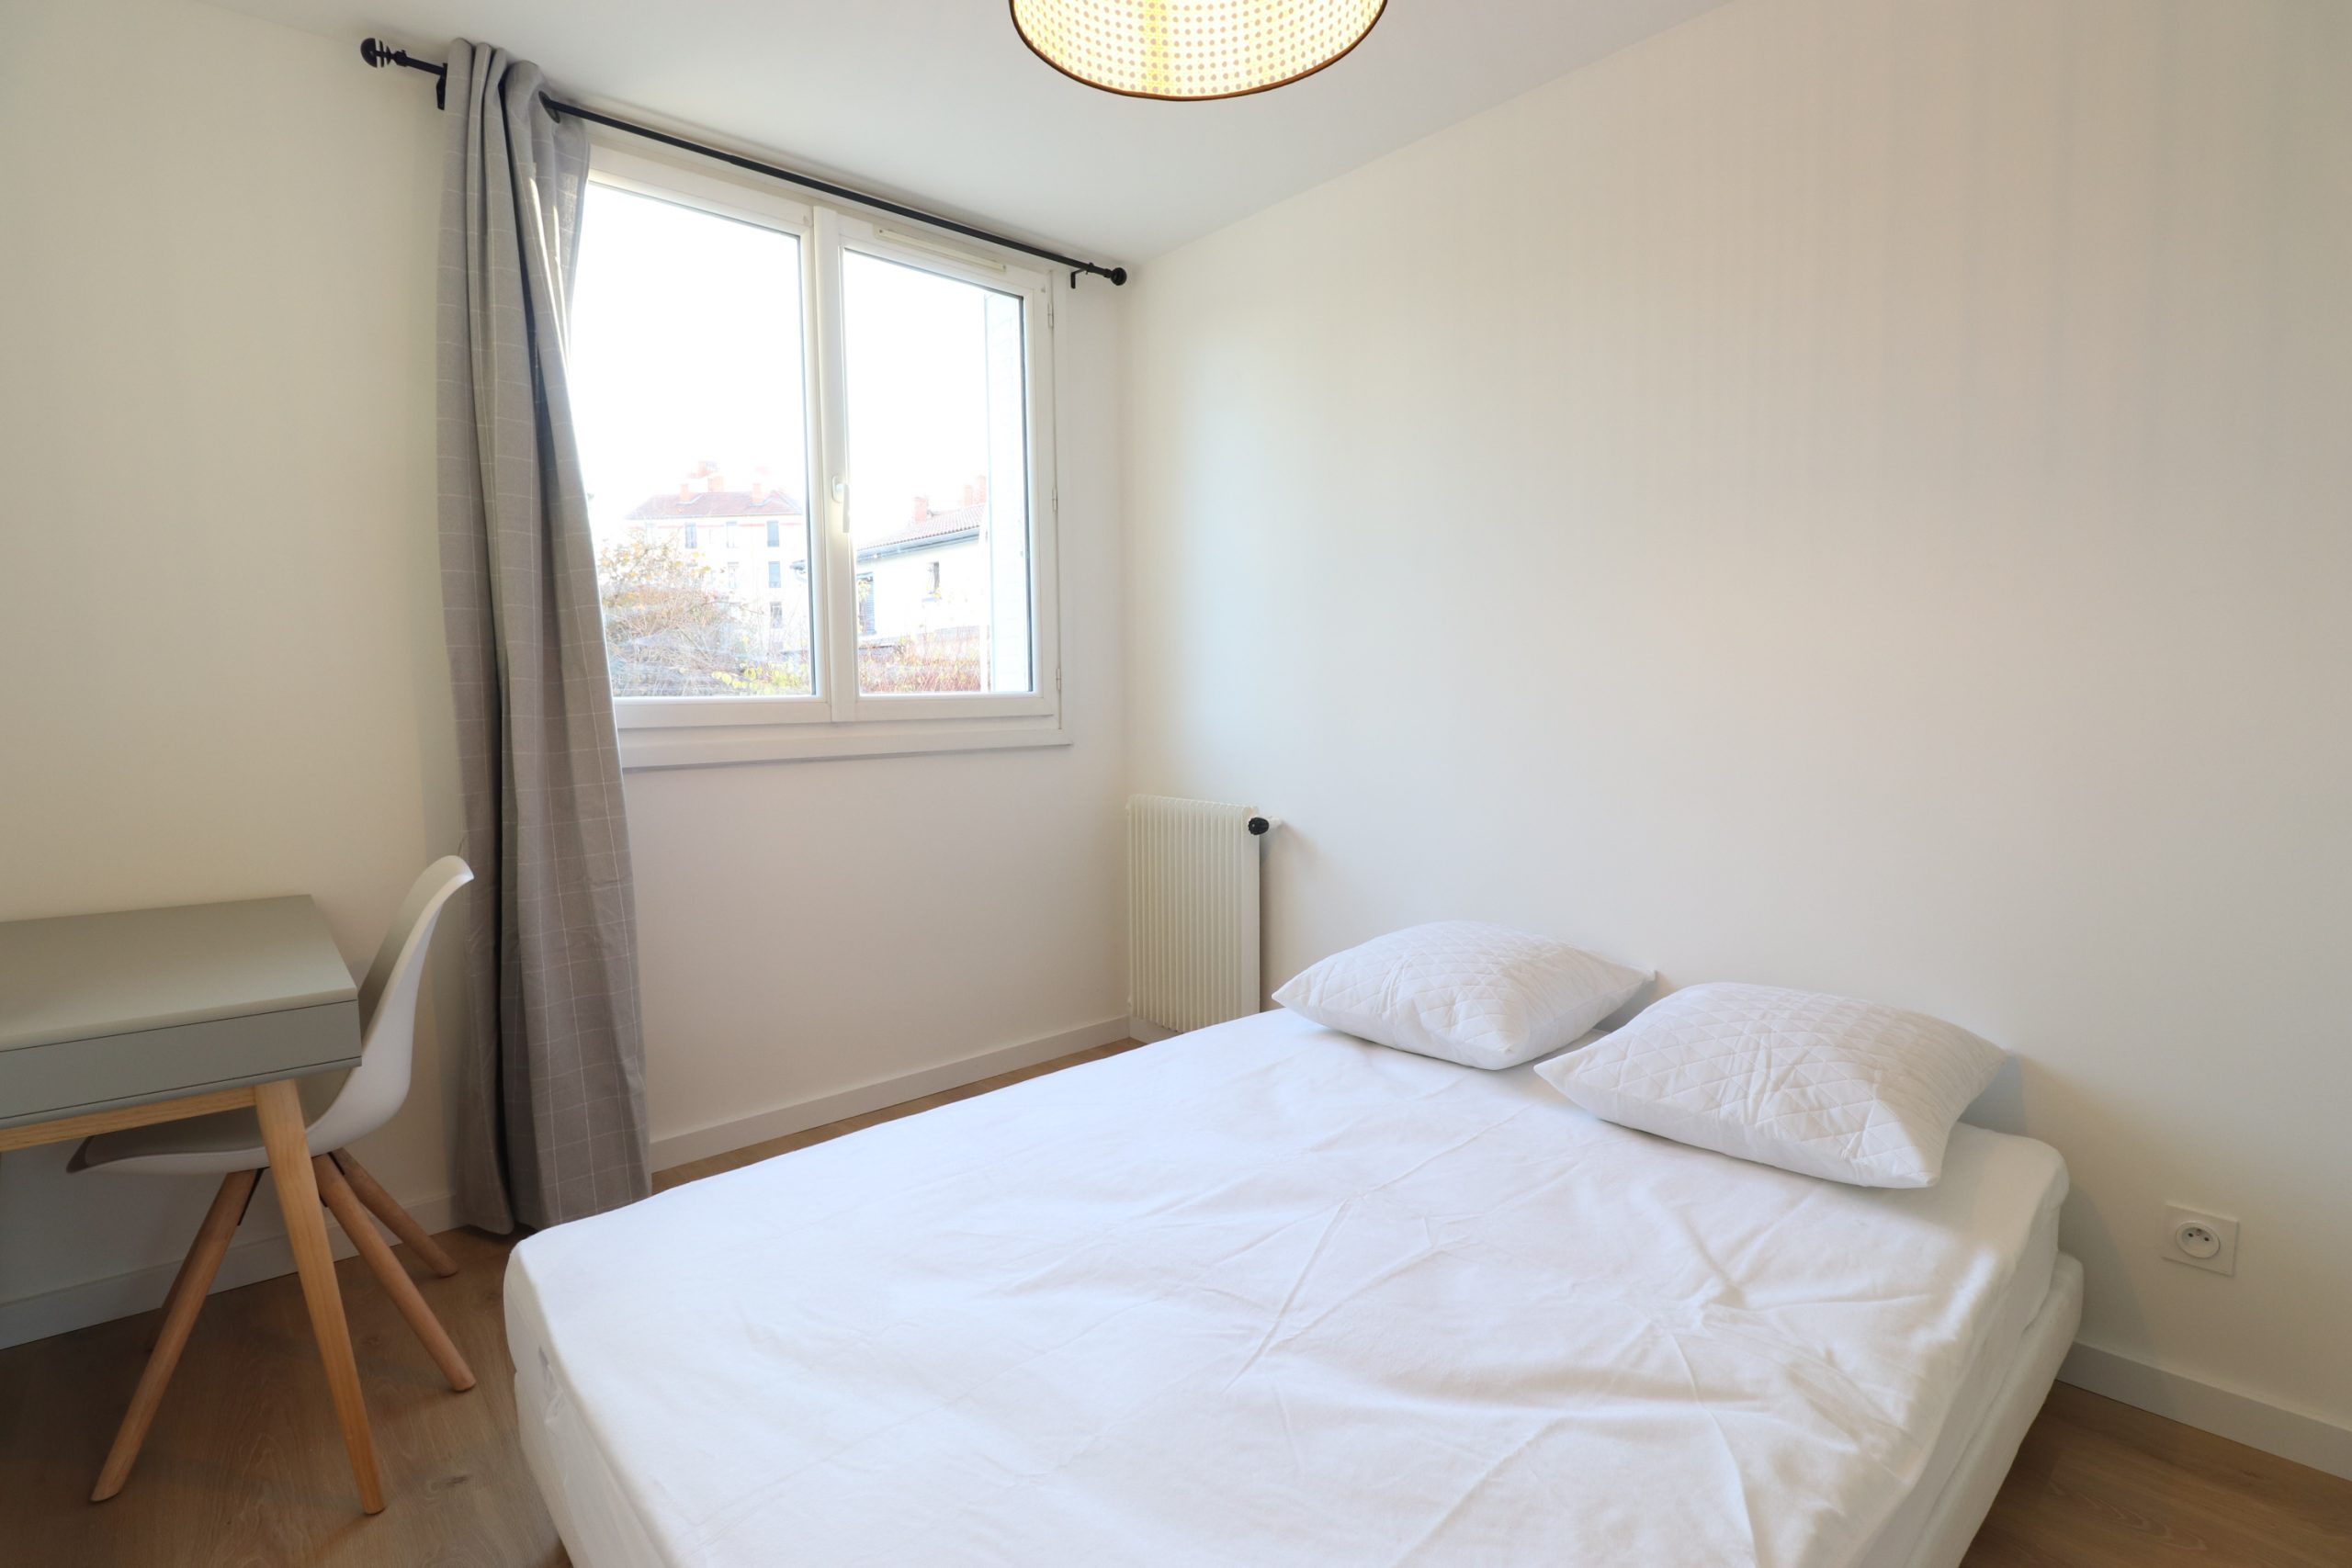 Location appartement Villeurbanne - Chambre 2